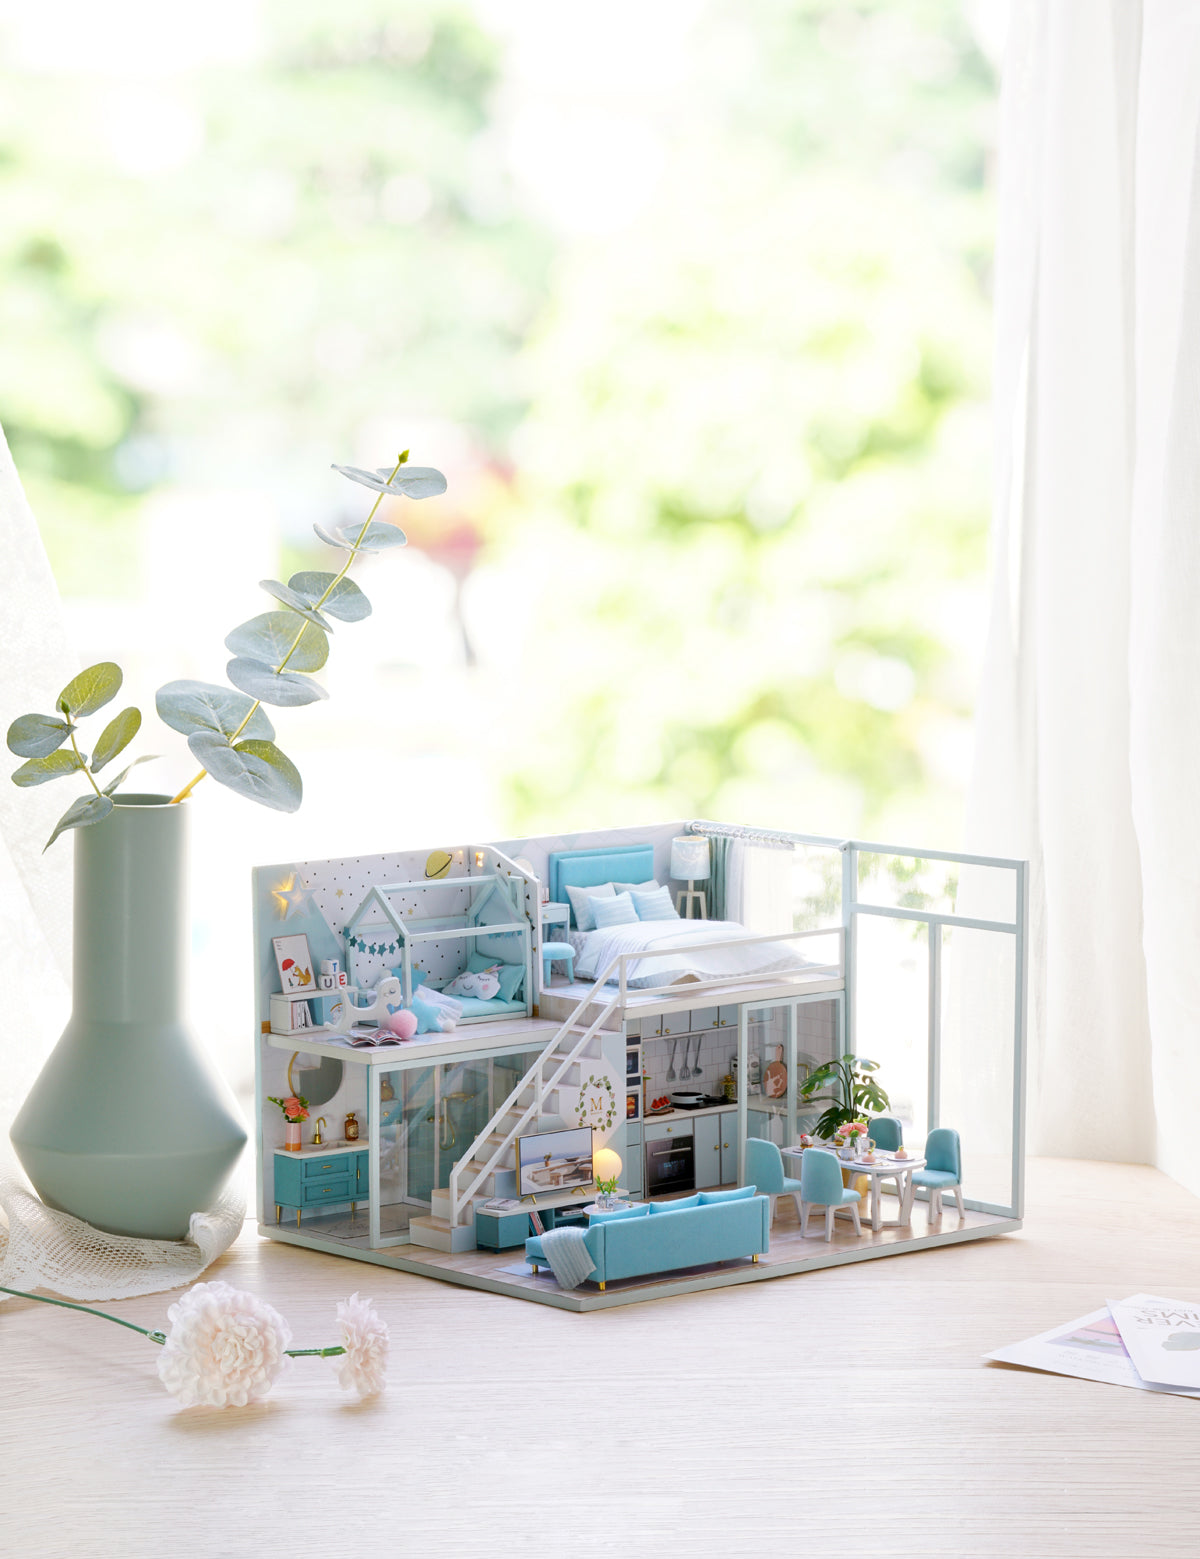 DIY: Blue Moon Miniature Dollhouse Kit